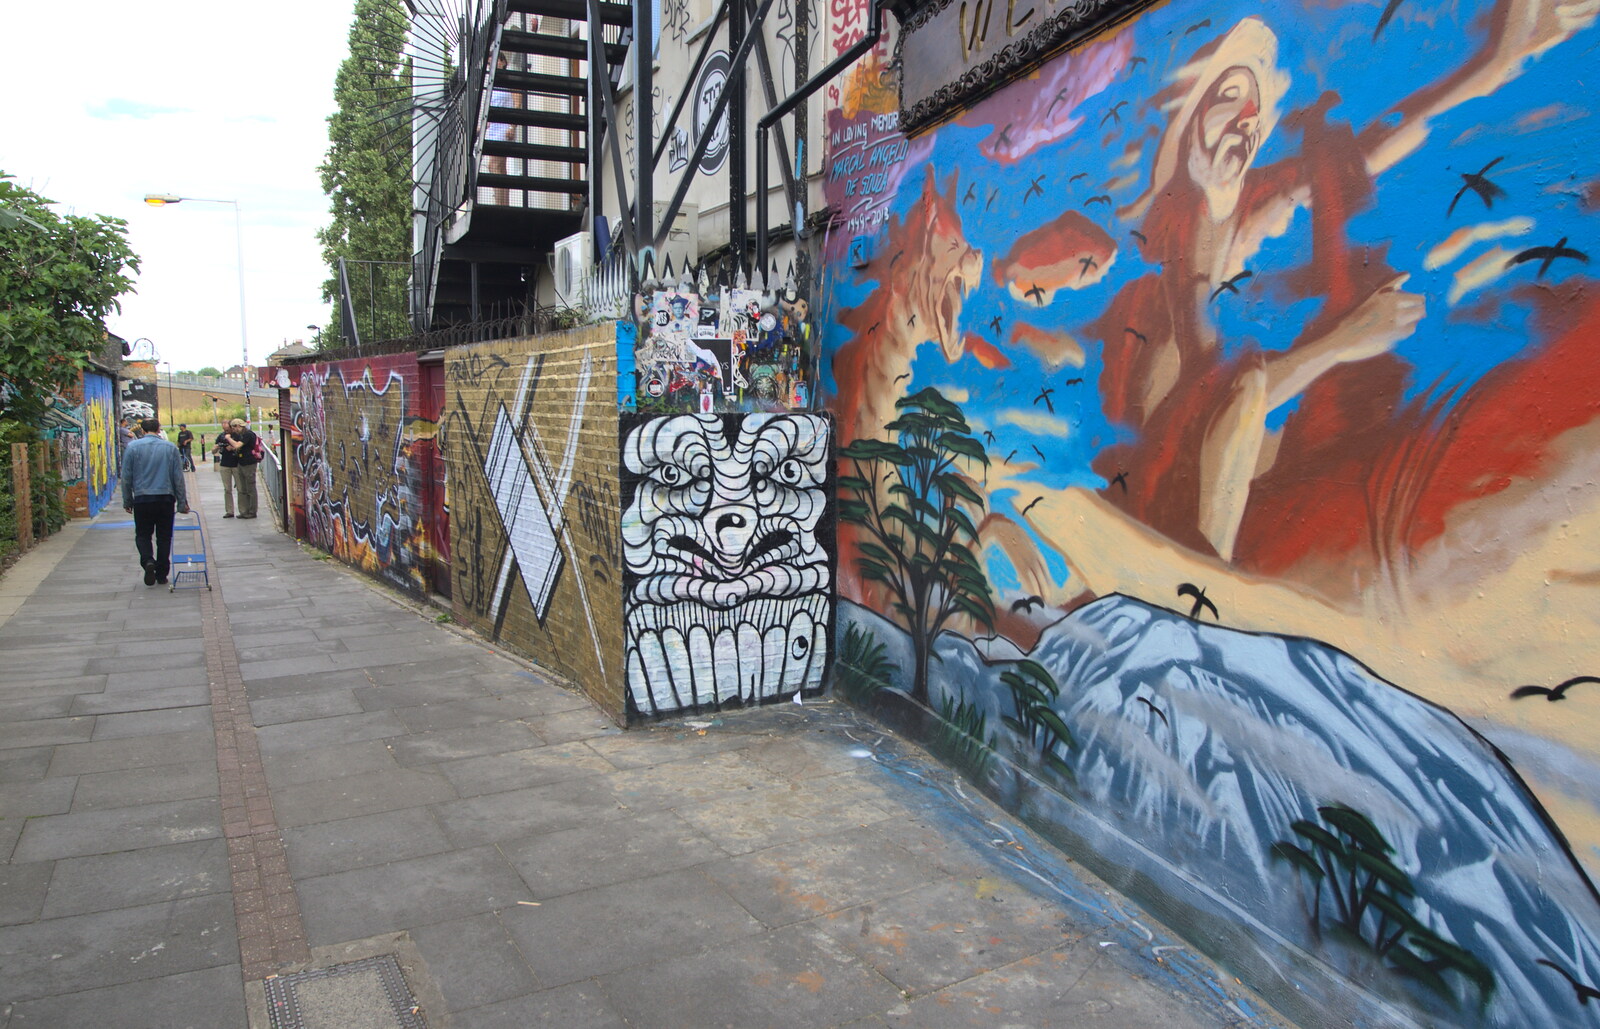 Street art by the railway line from Spitalfields and Brick Lane Street Art, Whitechapel, London - 10th August 2013